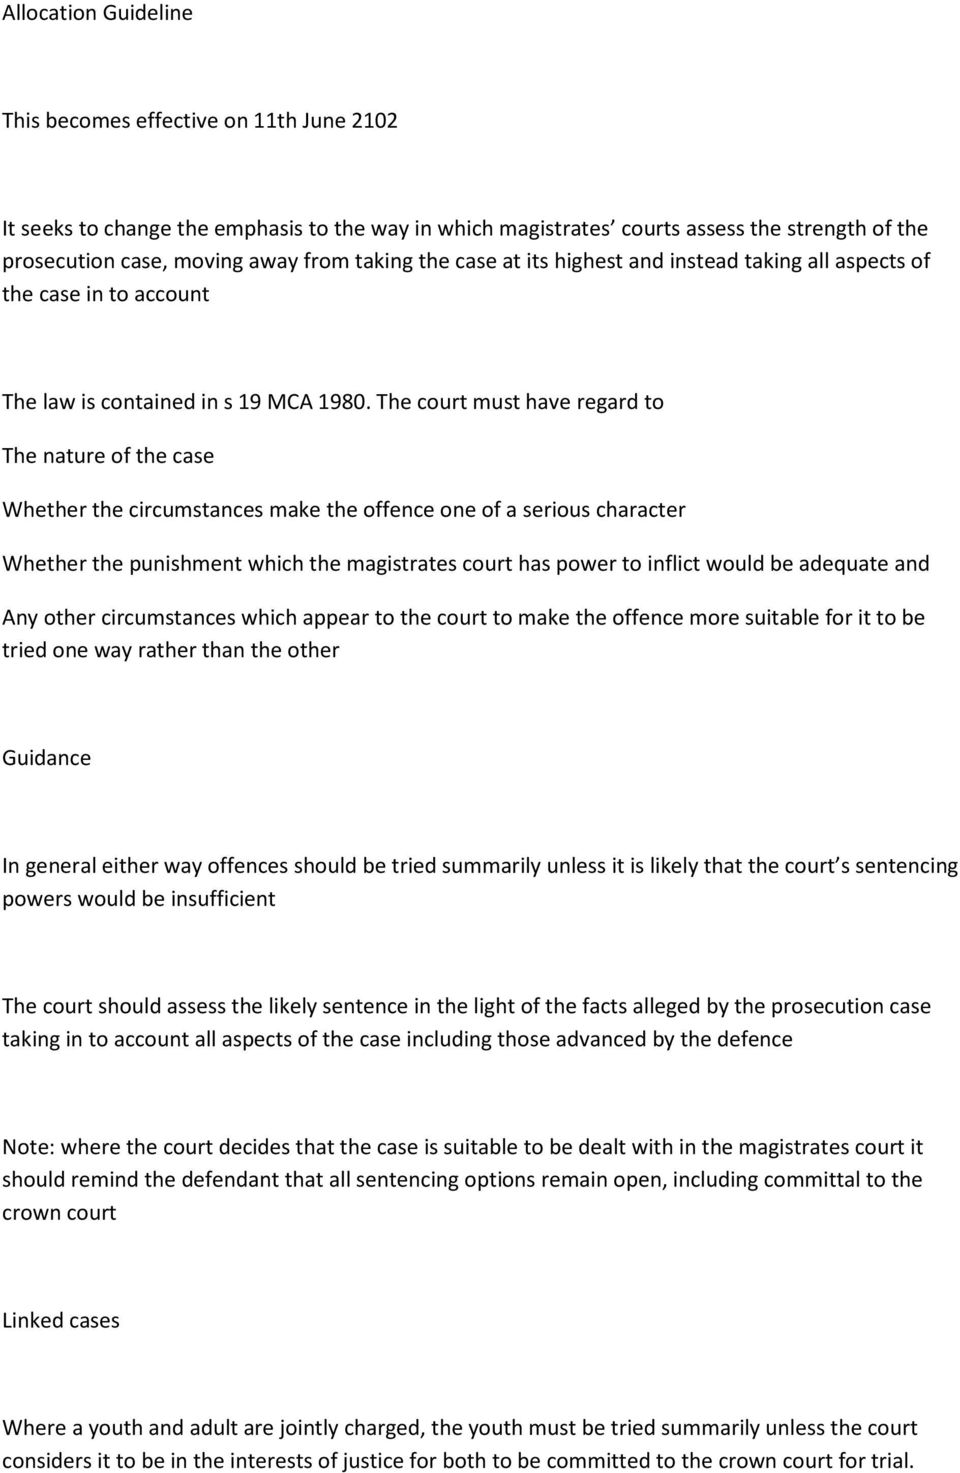 magistrates sentencing powers